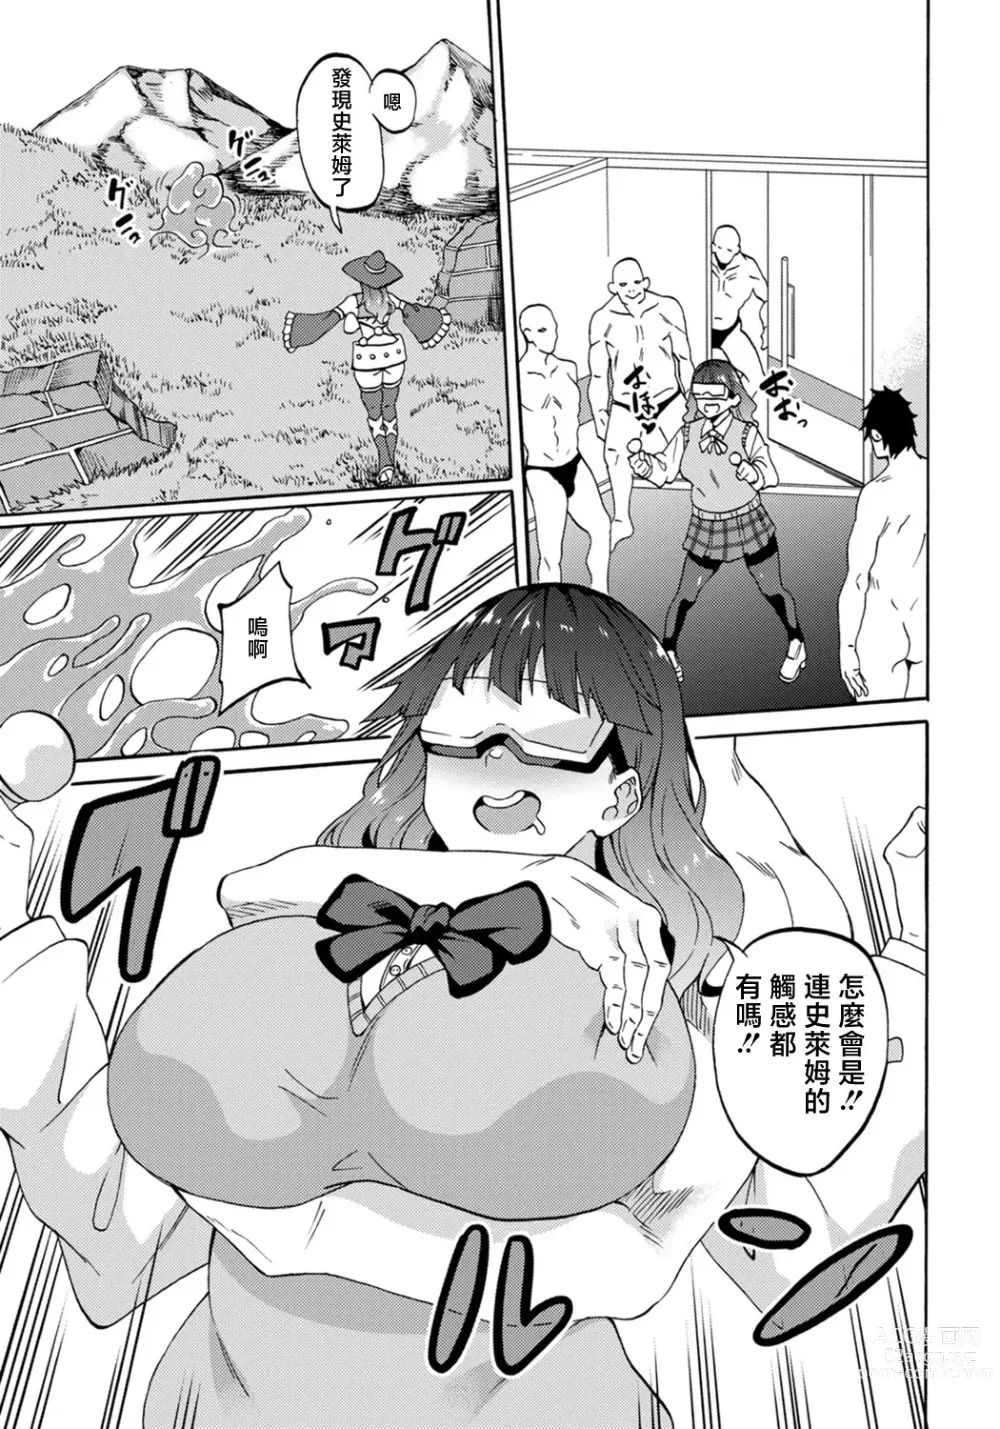 Page 5 of manga VR Sekai de Ishukan Koubi